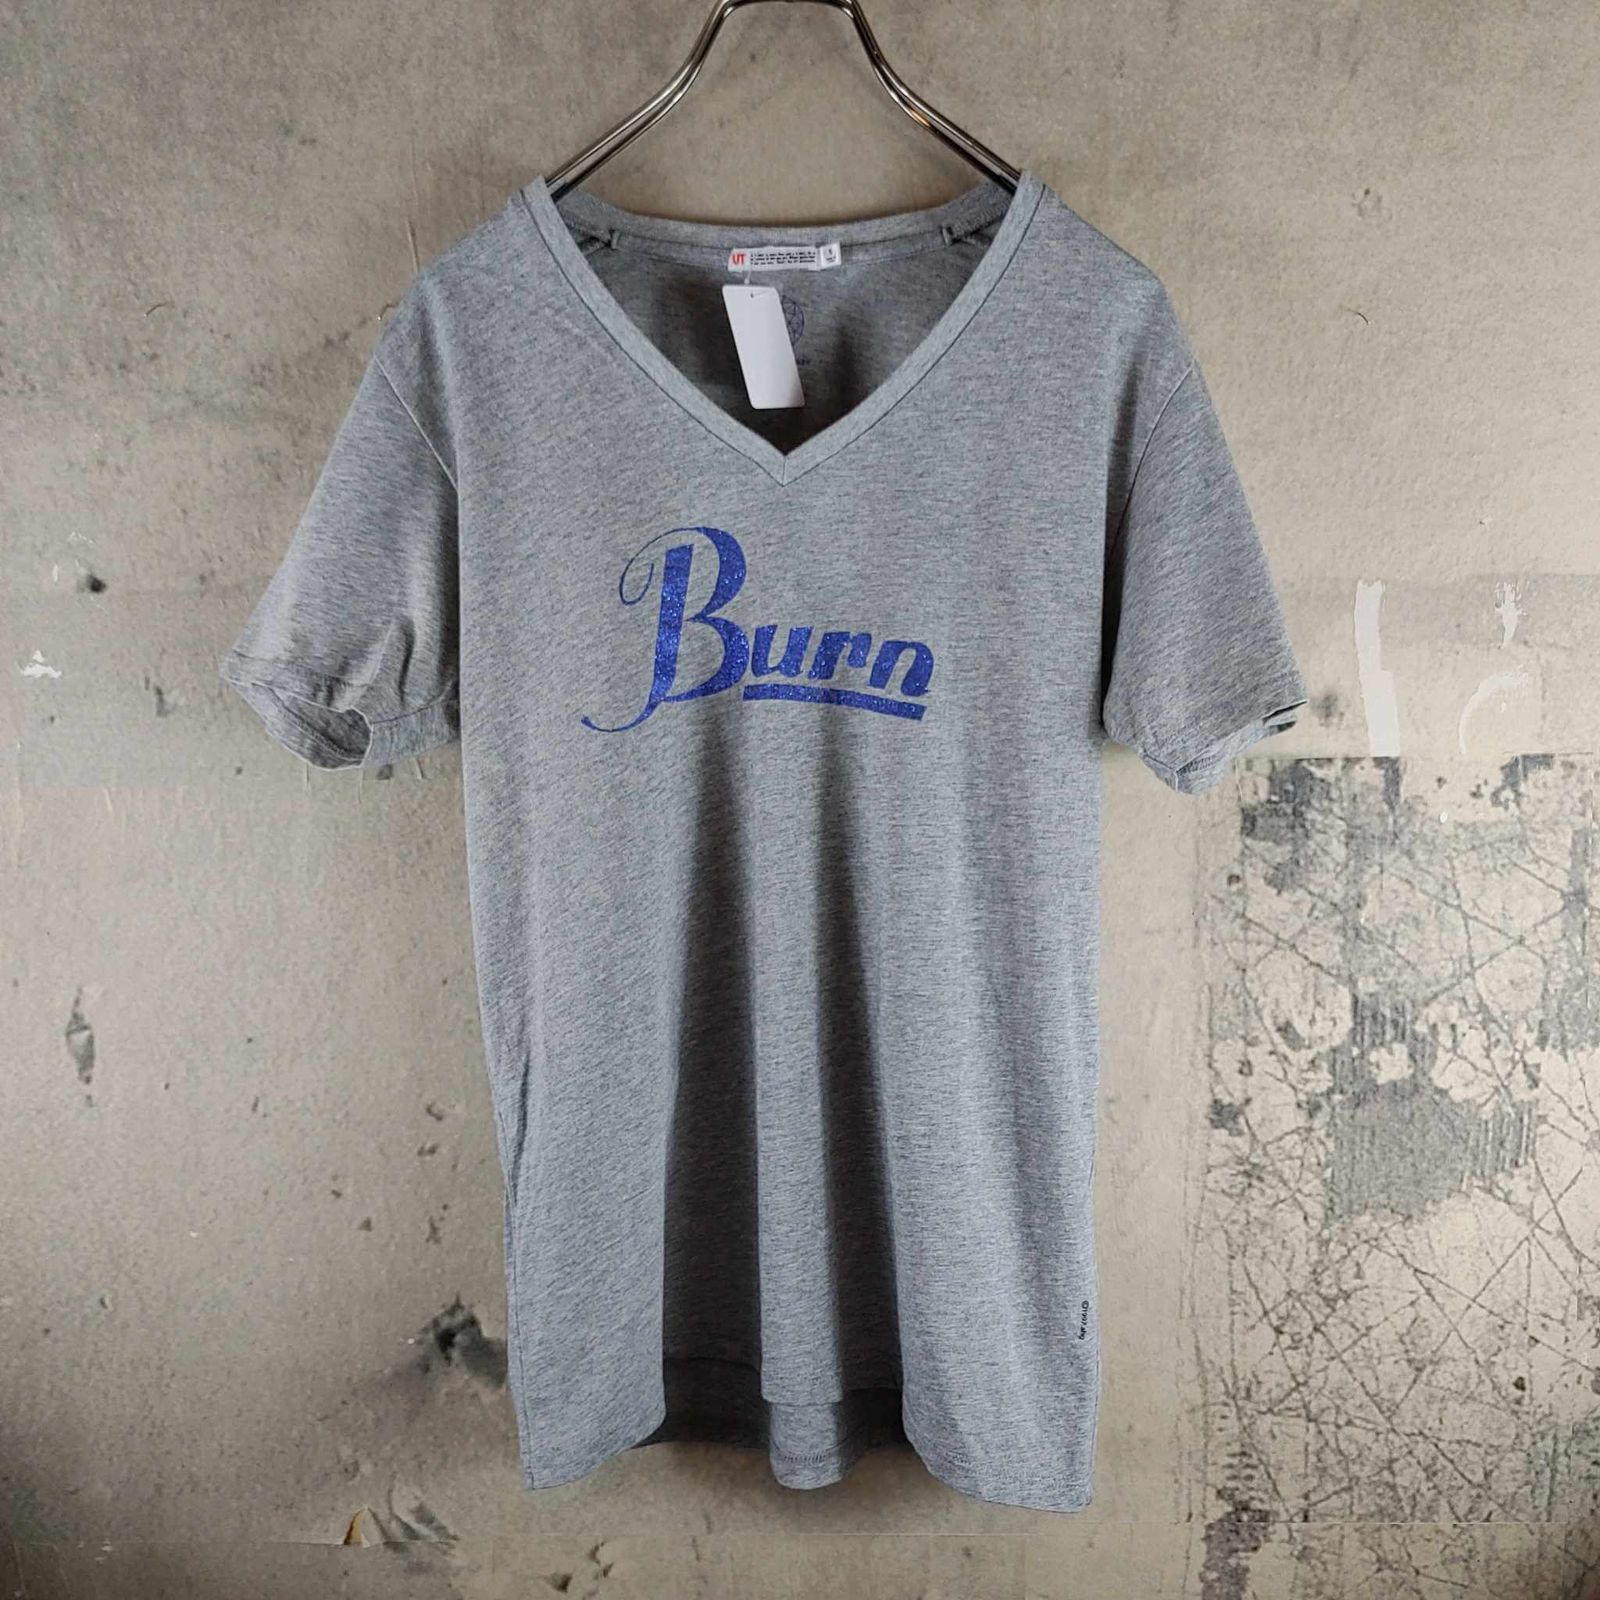 THE YELLOW MONKEY Tシャツ Ｓサイズ 新品 - 通販 - olbi.com